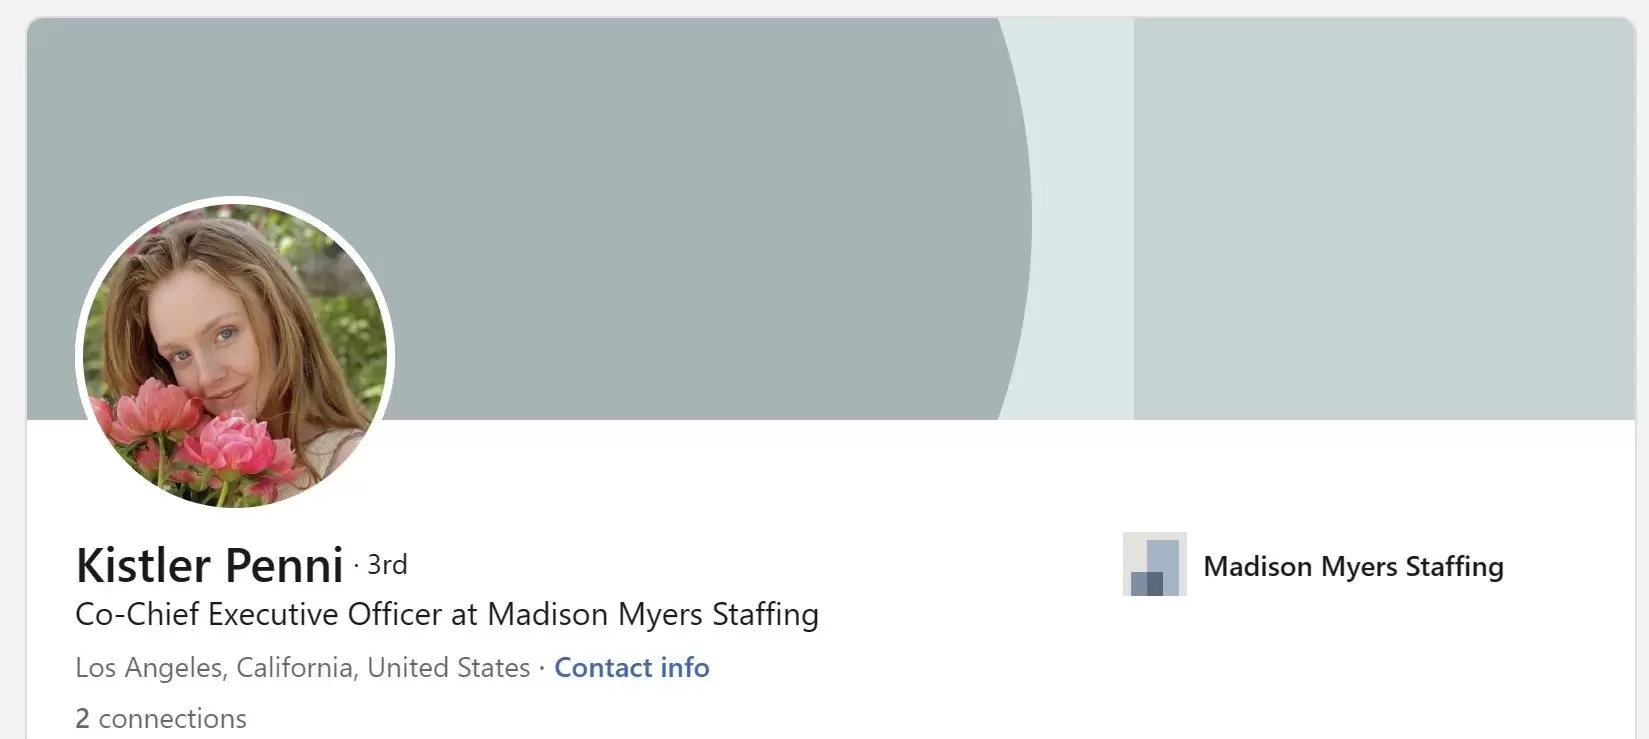 Madison Myers Staffing on LinkedIn